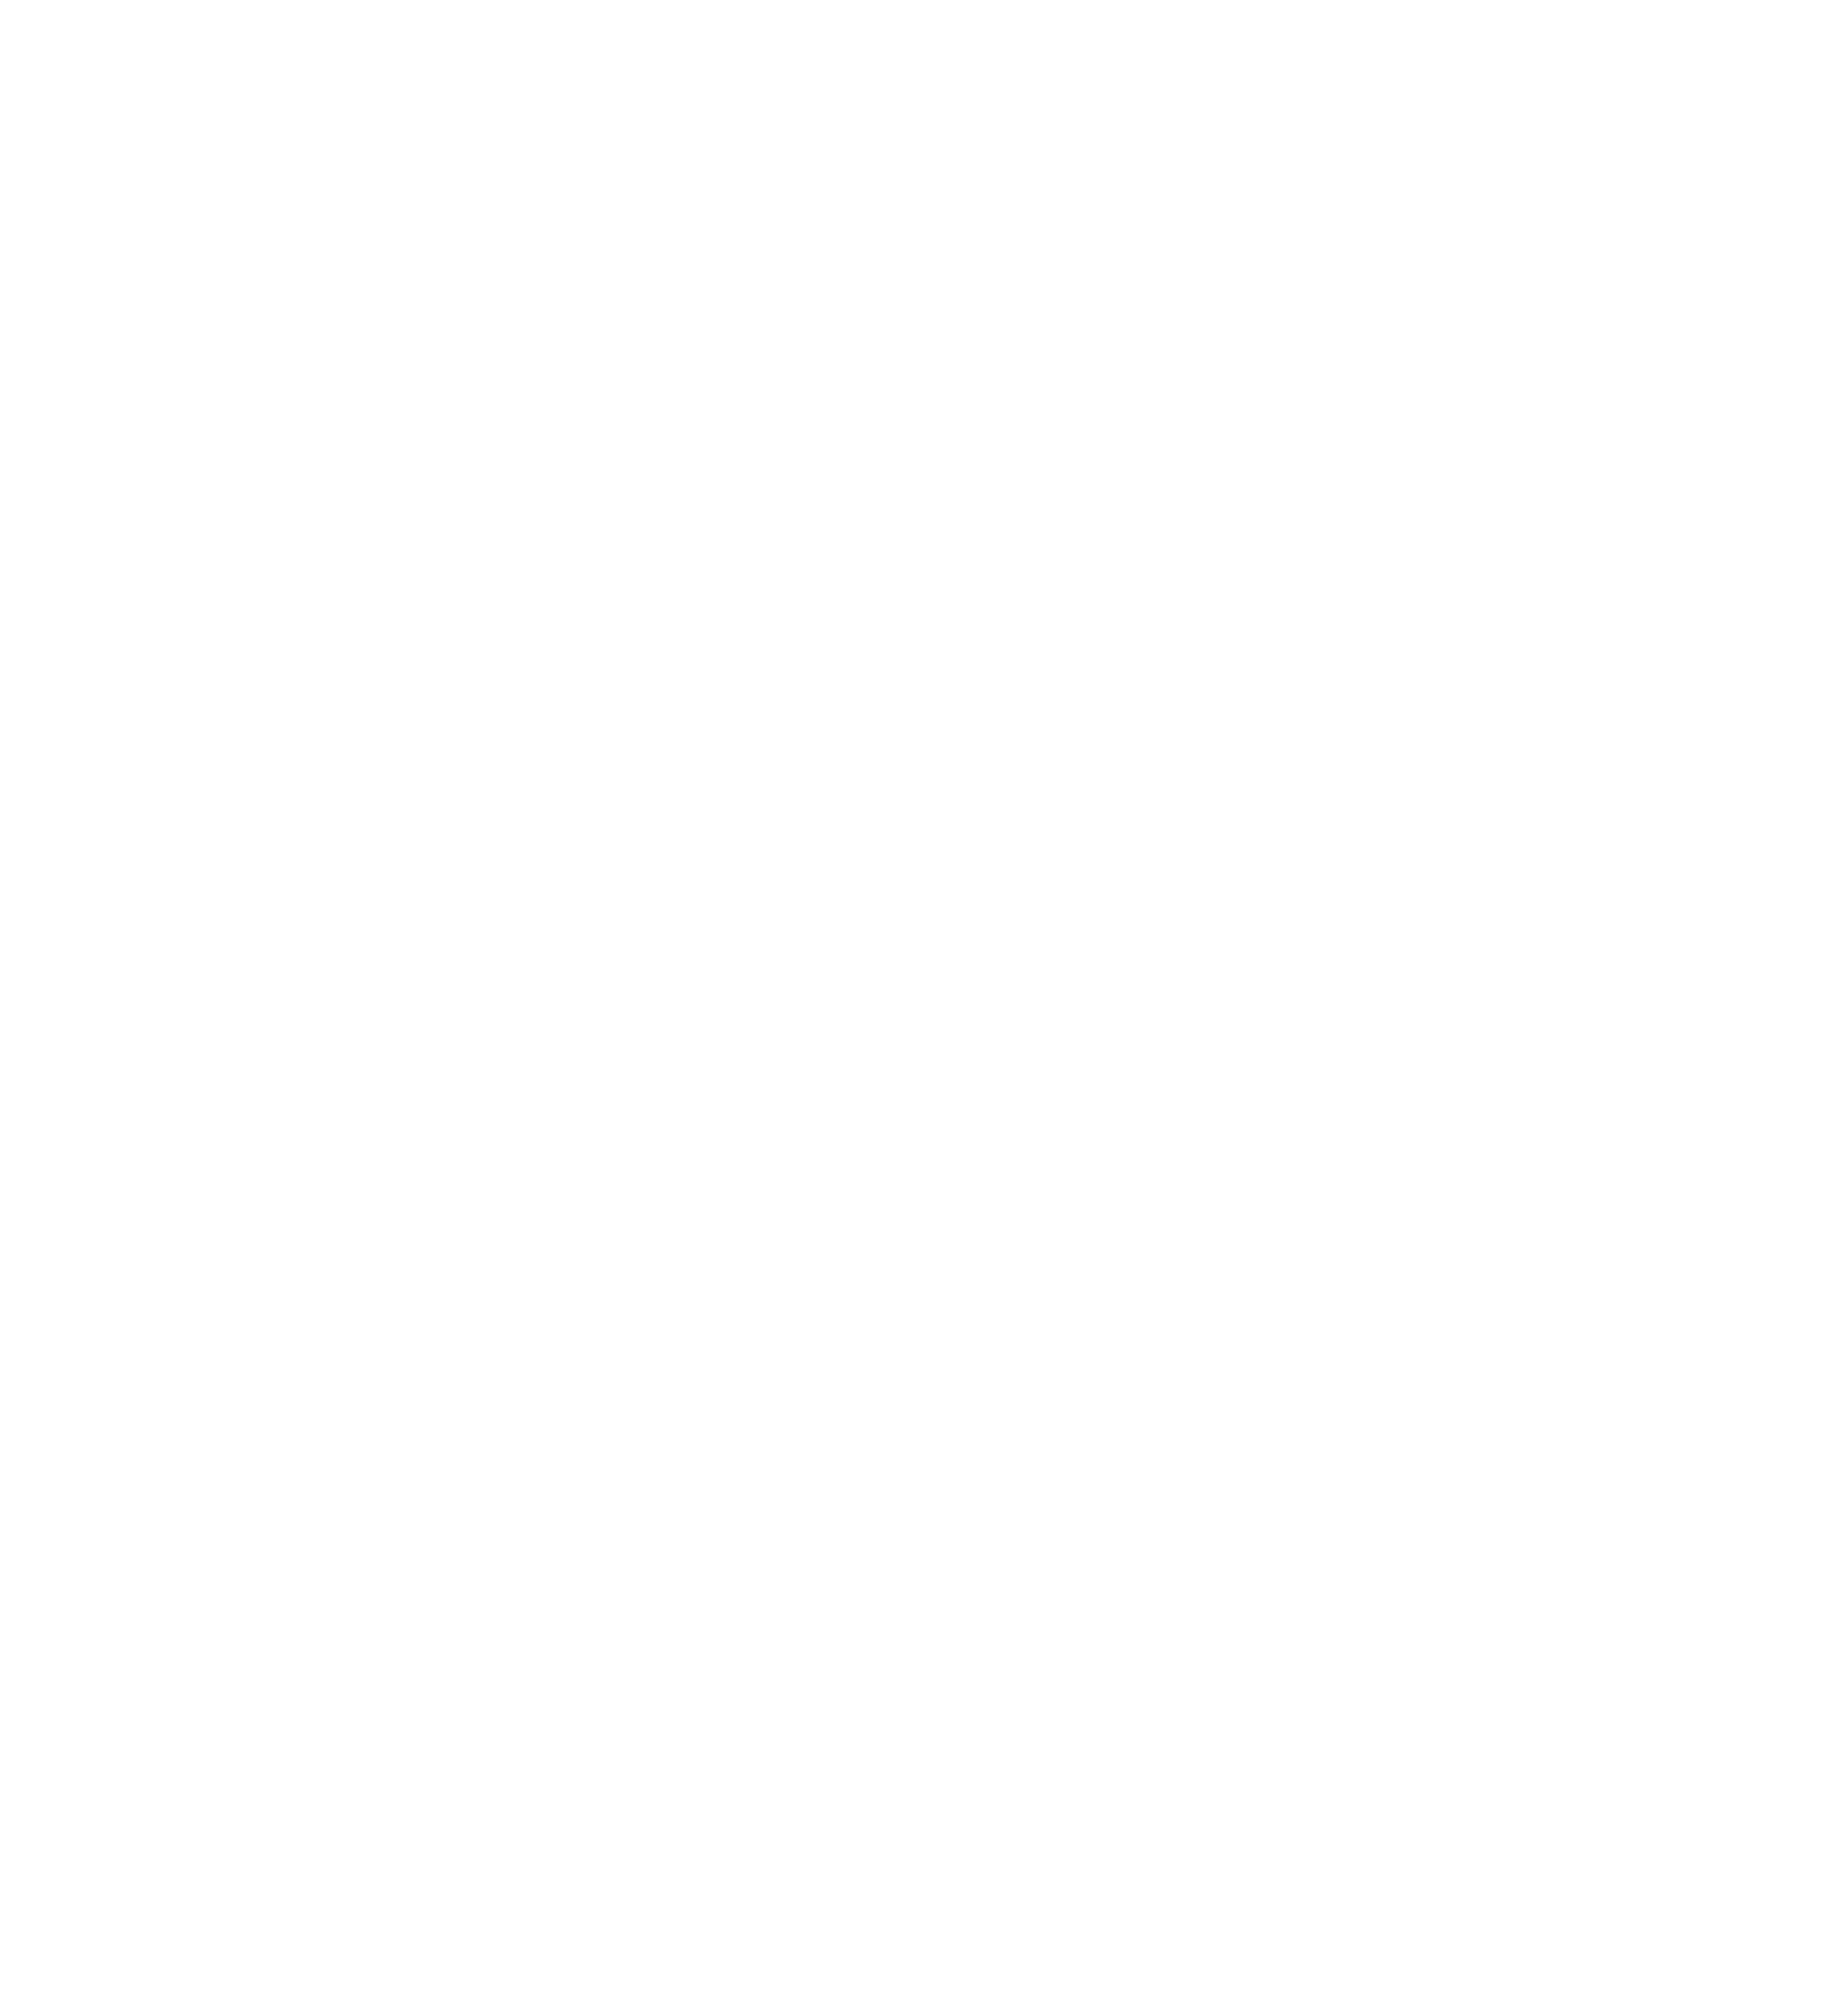 NAGYFOKI-HOLTÁG